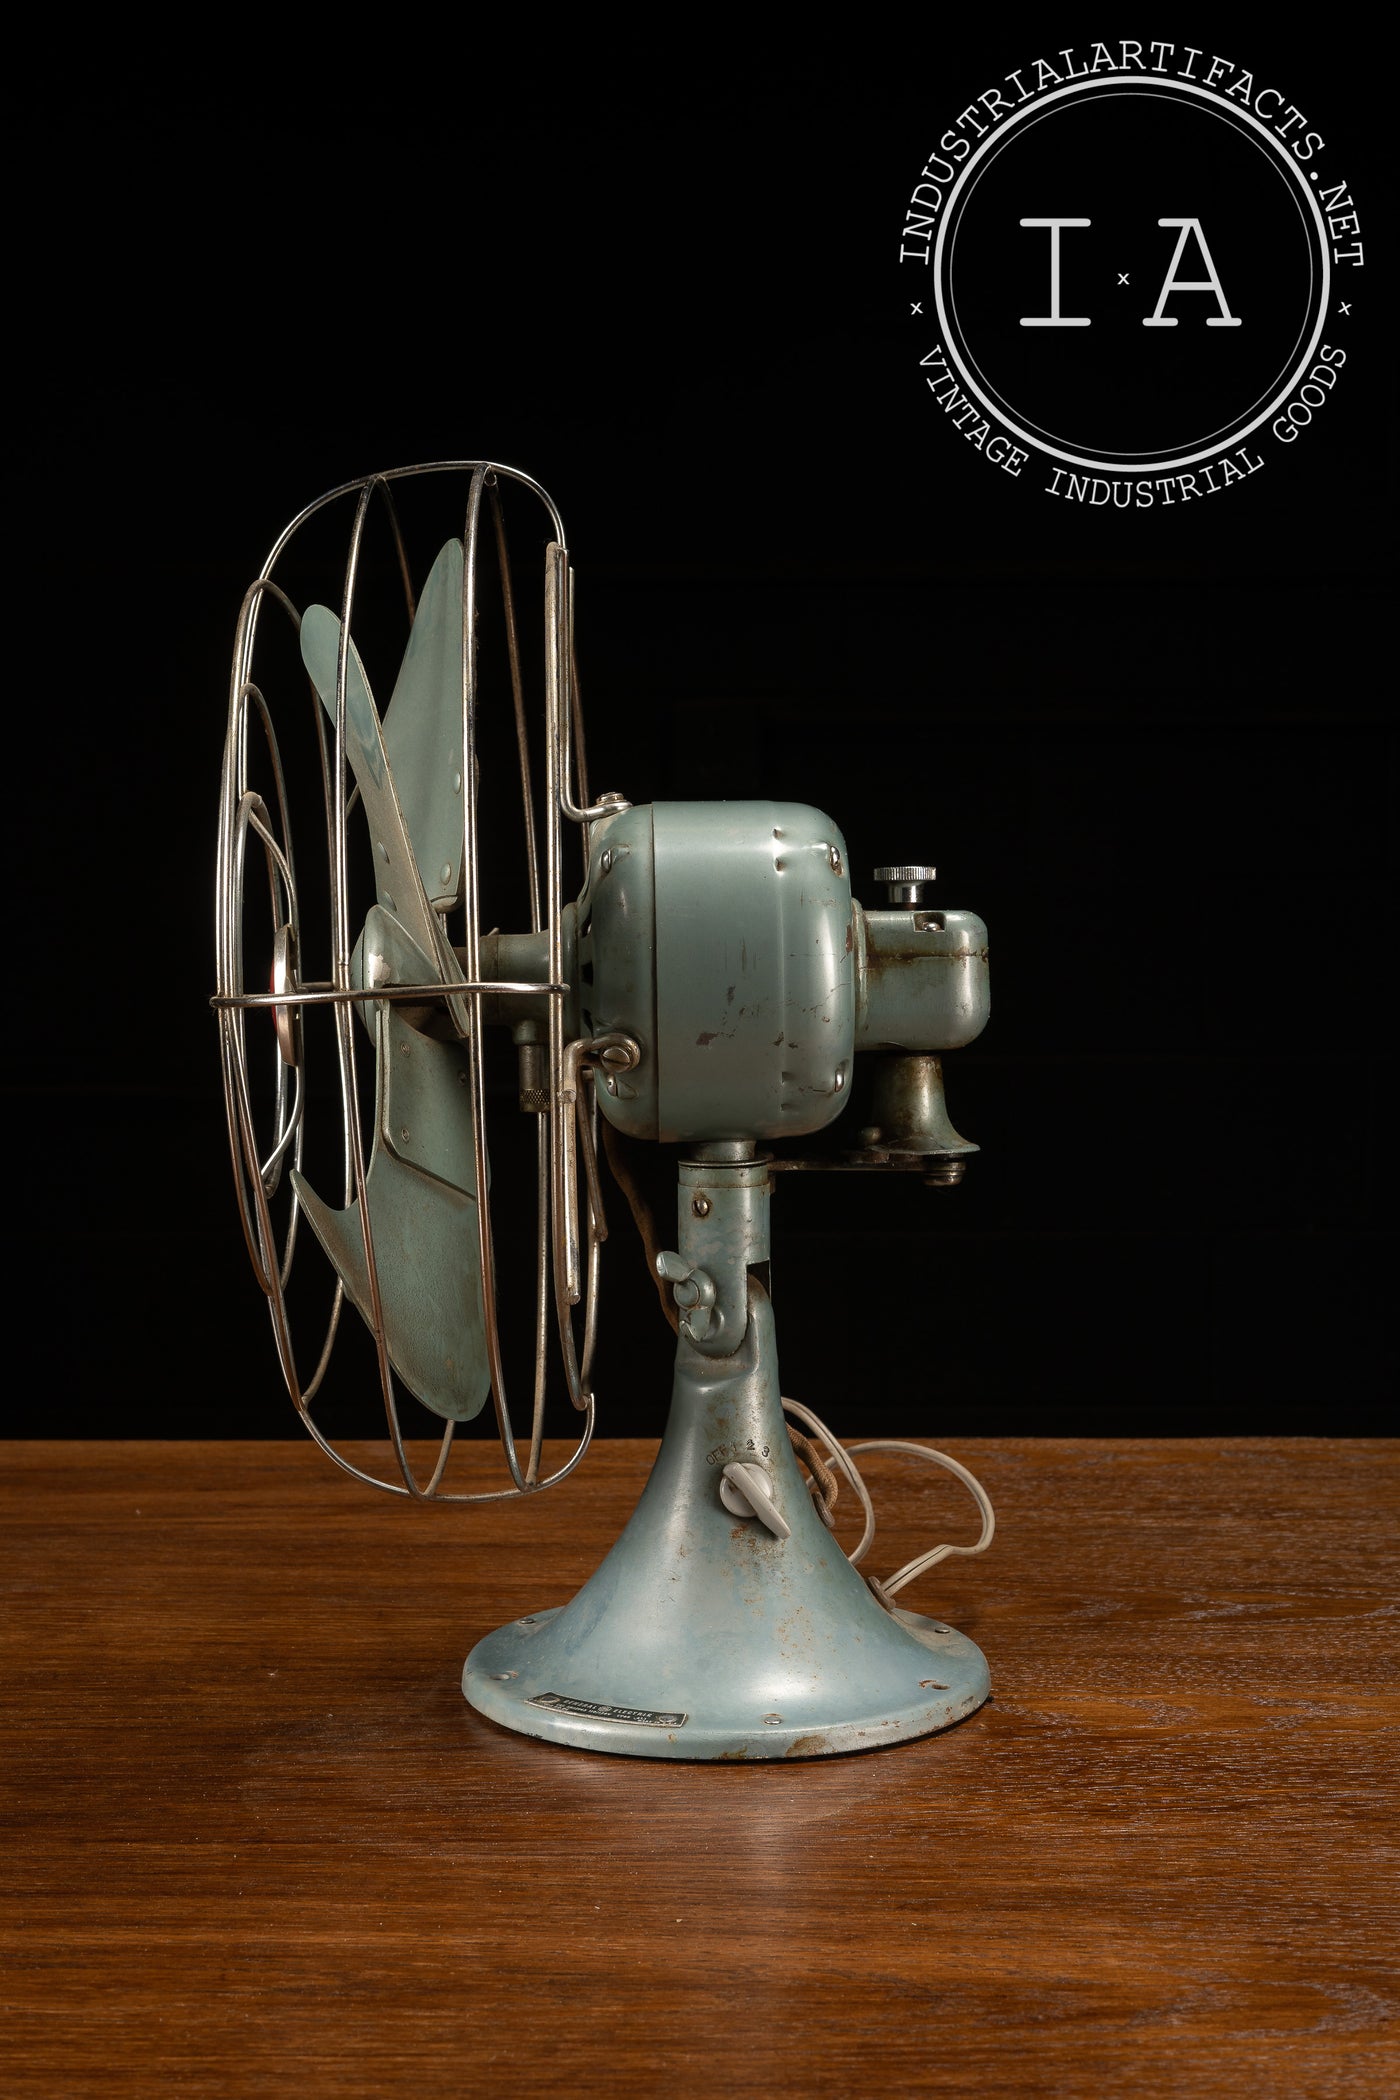 Vintage Working Tabletop Fan by General Electric